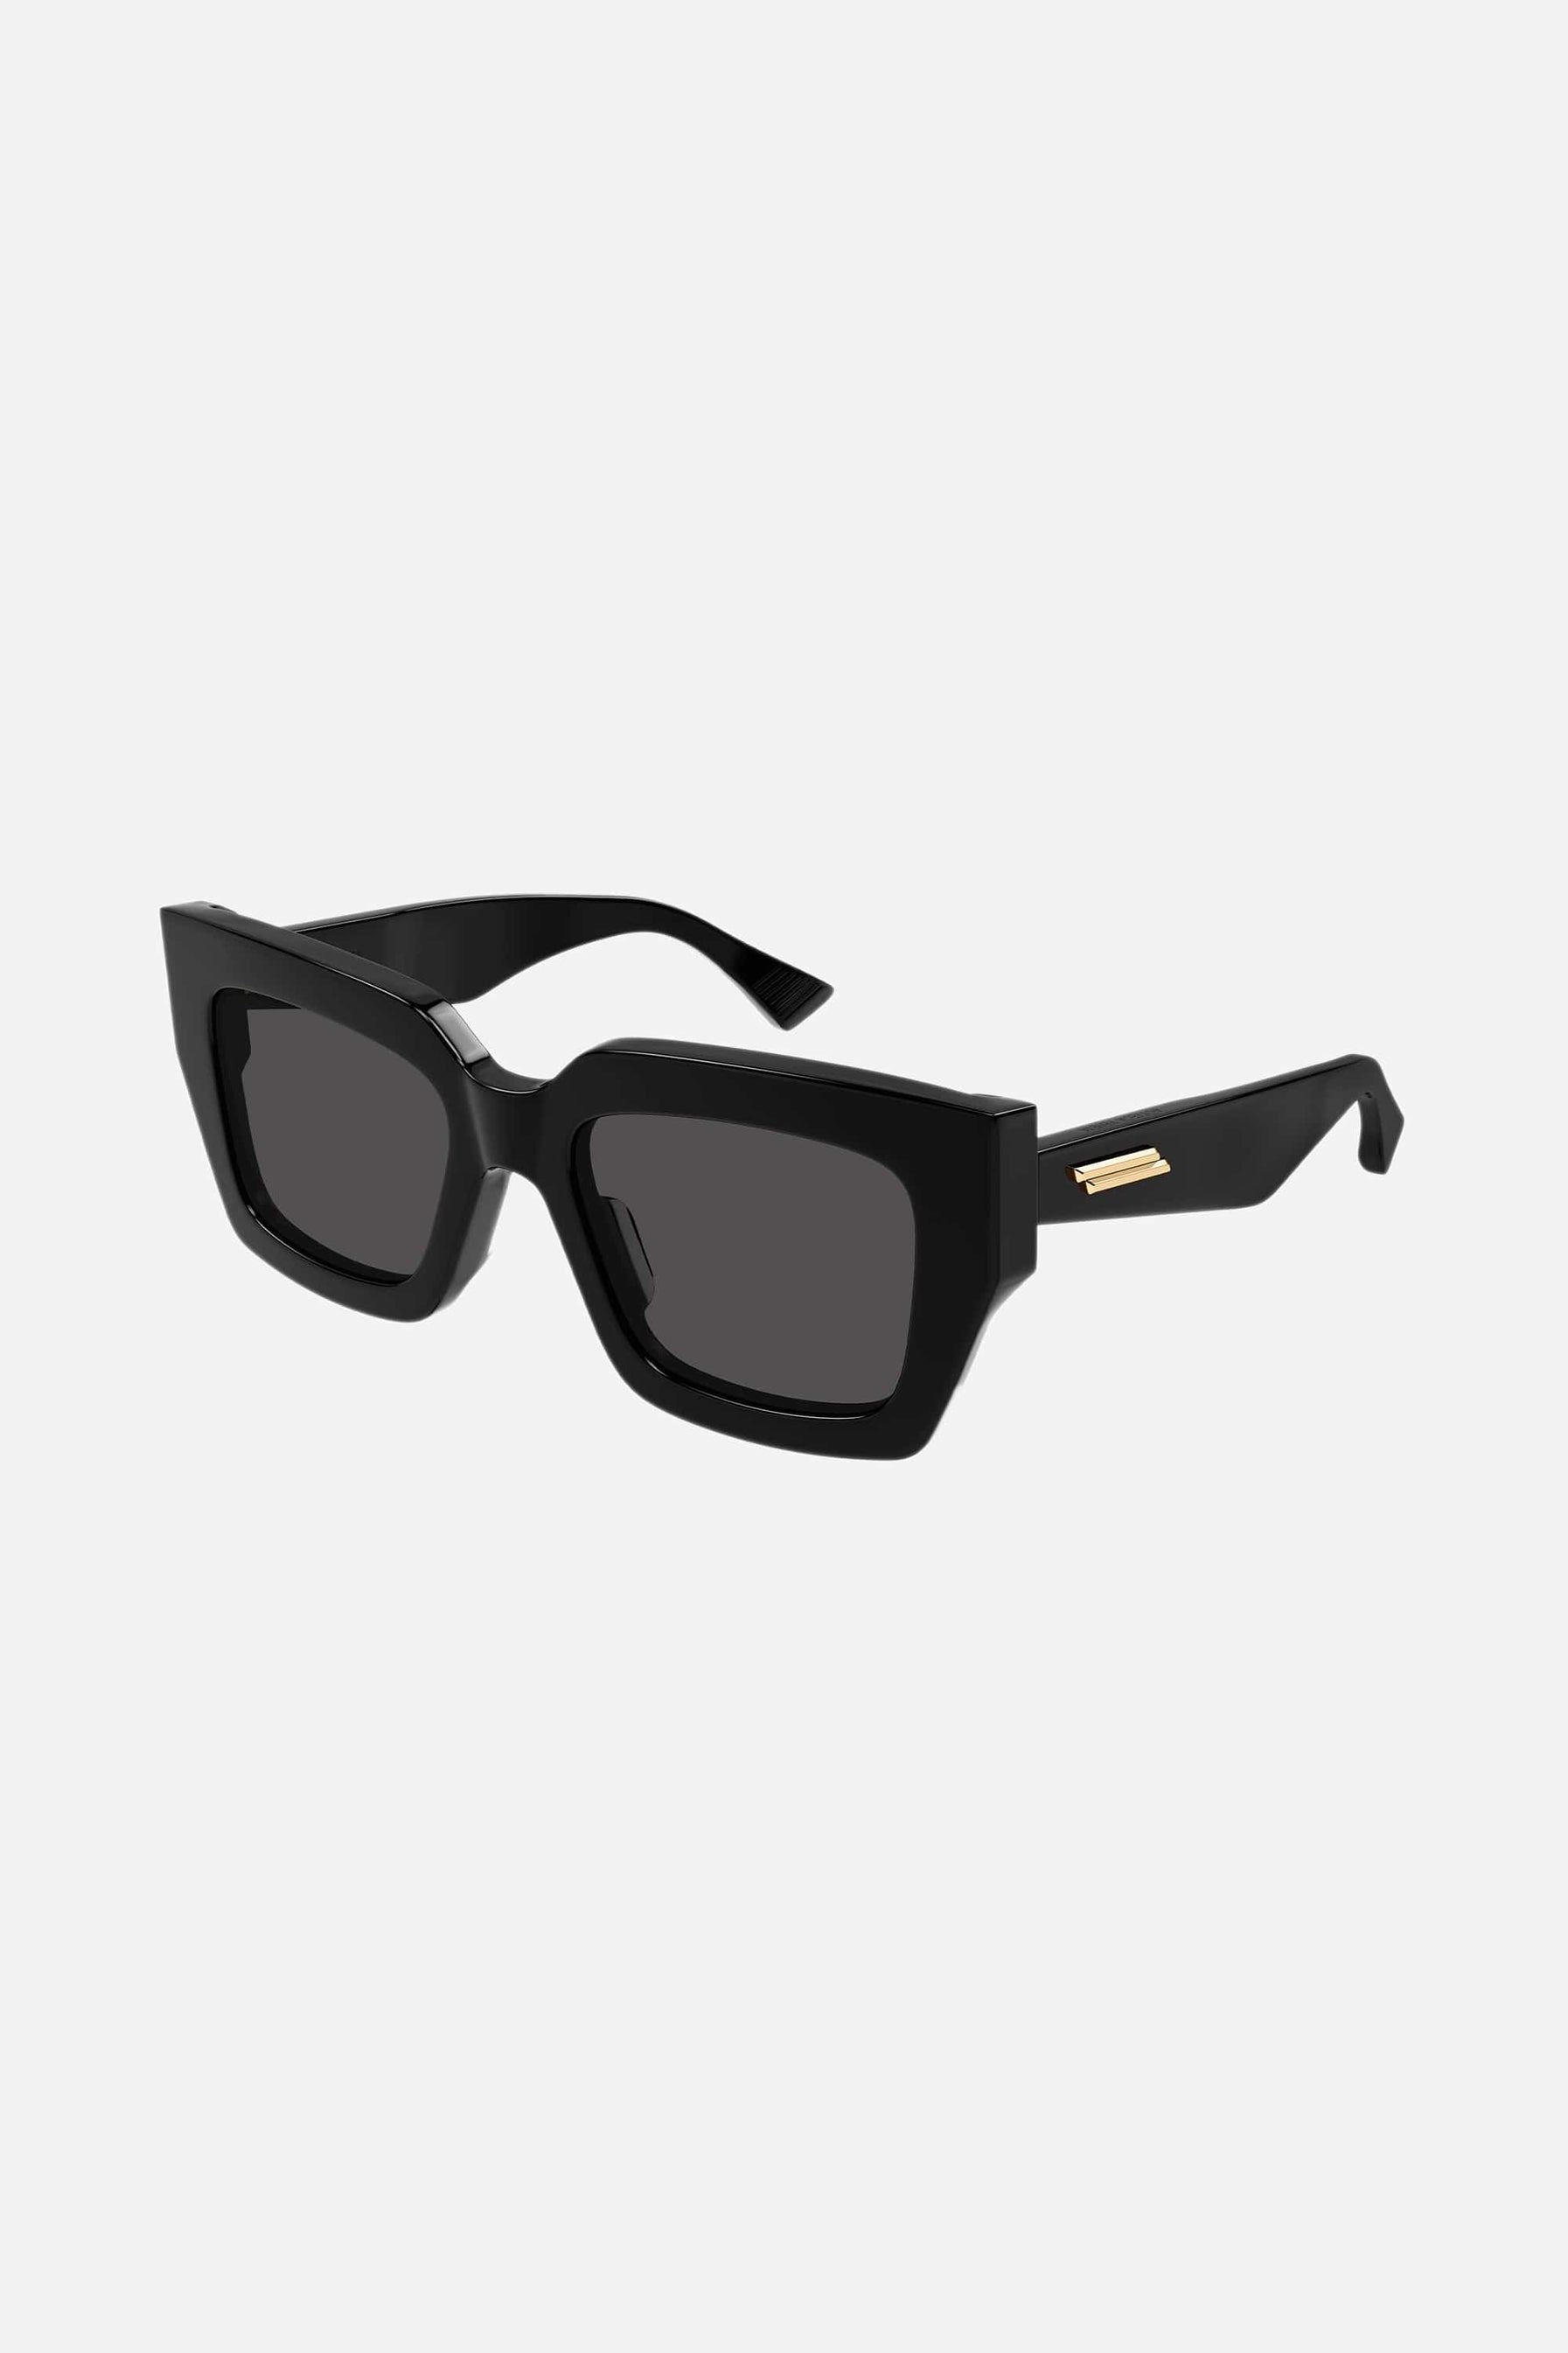 Bottega Veneta squared bold black sunglasses - Eyewear Club